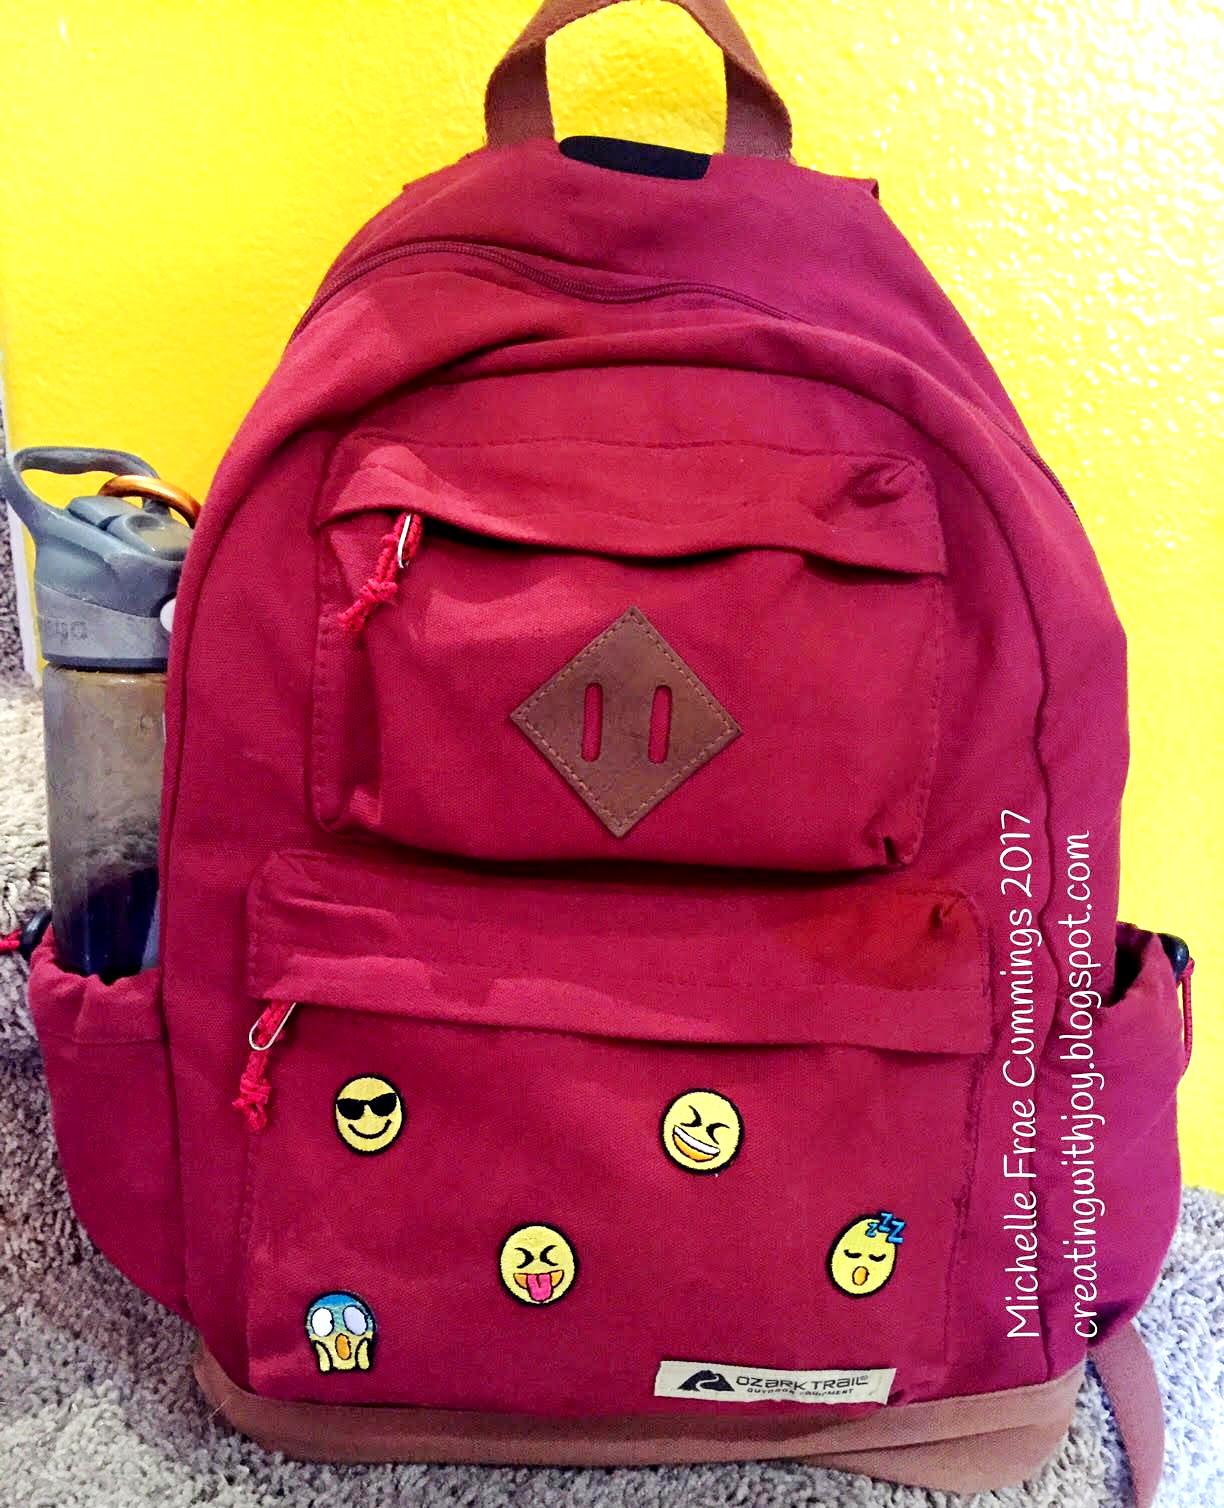 Creating with Joy: Emoji Backpack